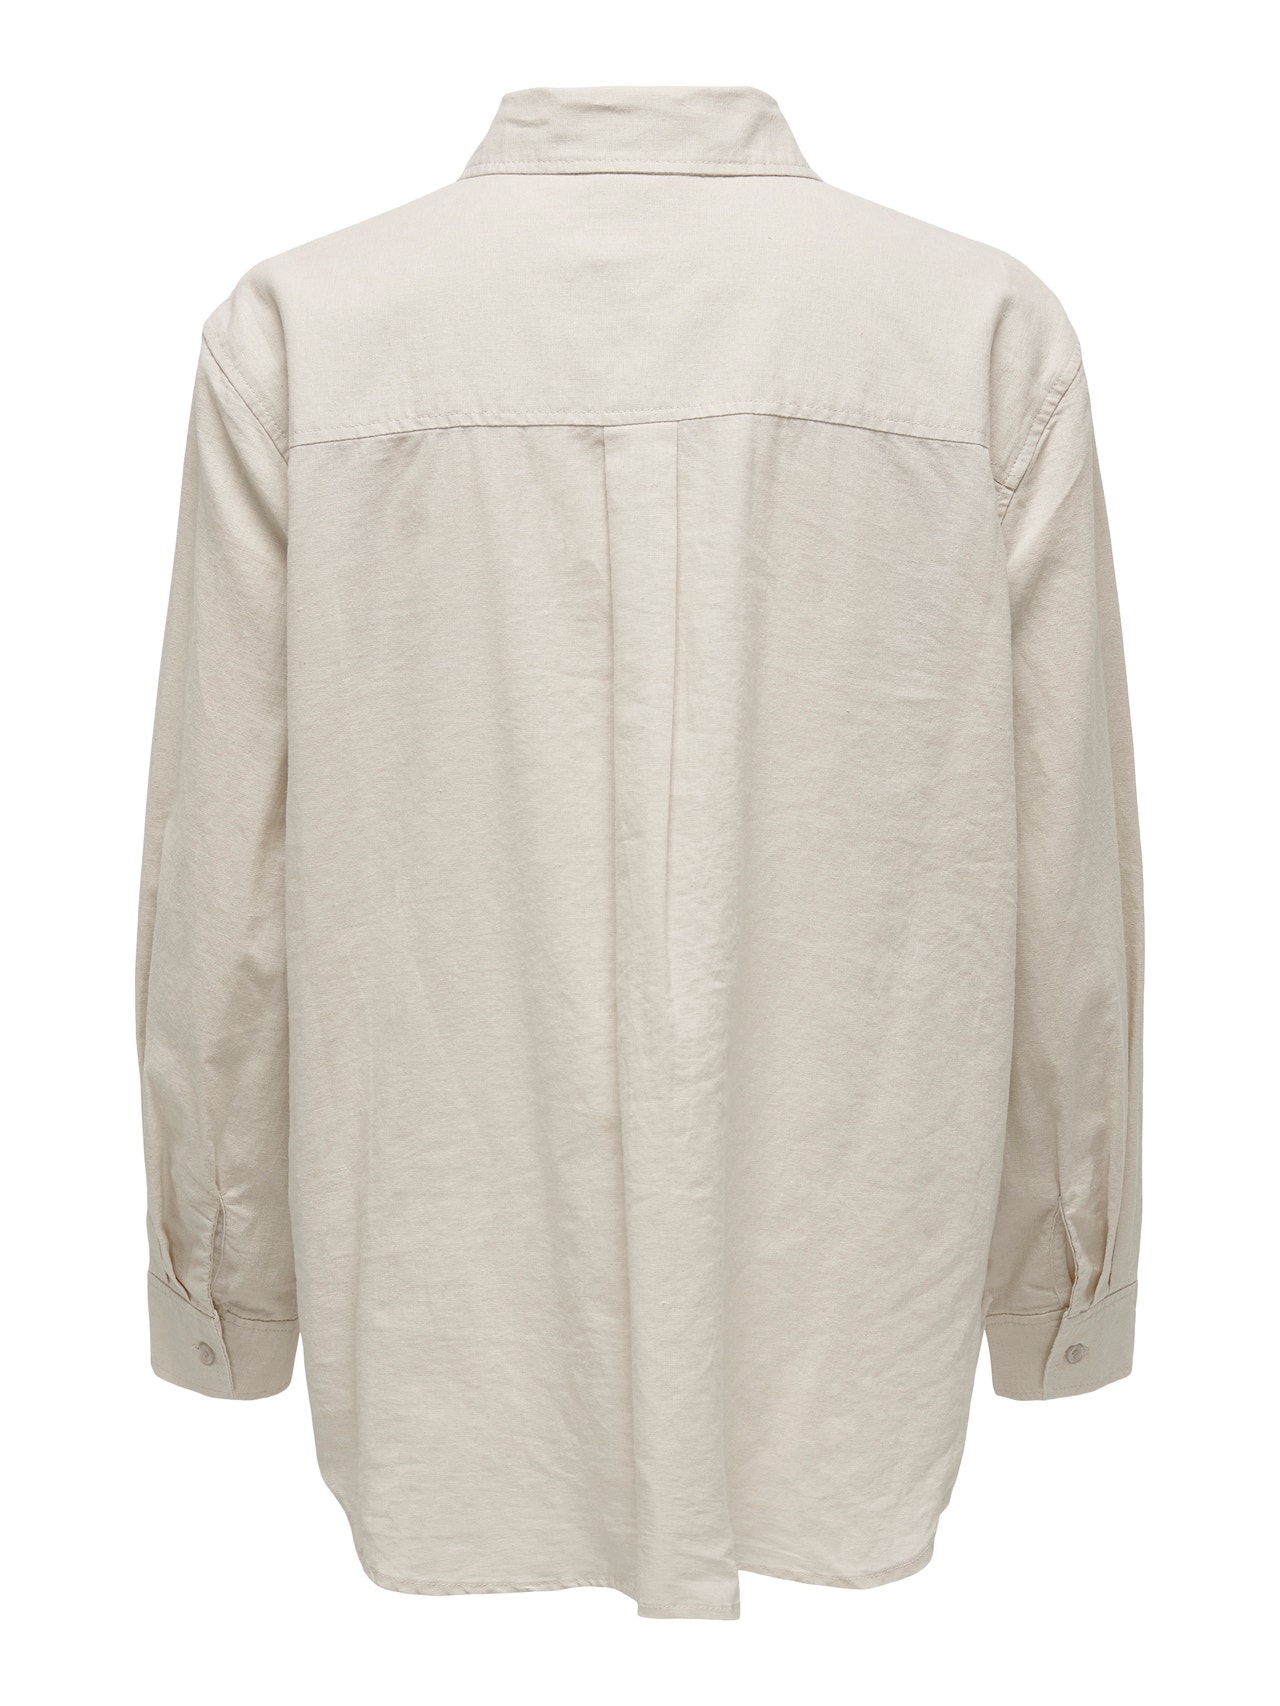 ONLY Chemises Regular Fit Col chemise Poignets boutonnés -Moonbeam - 15259585